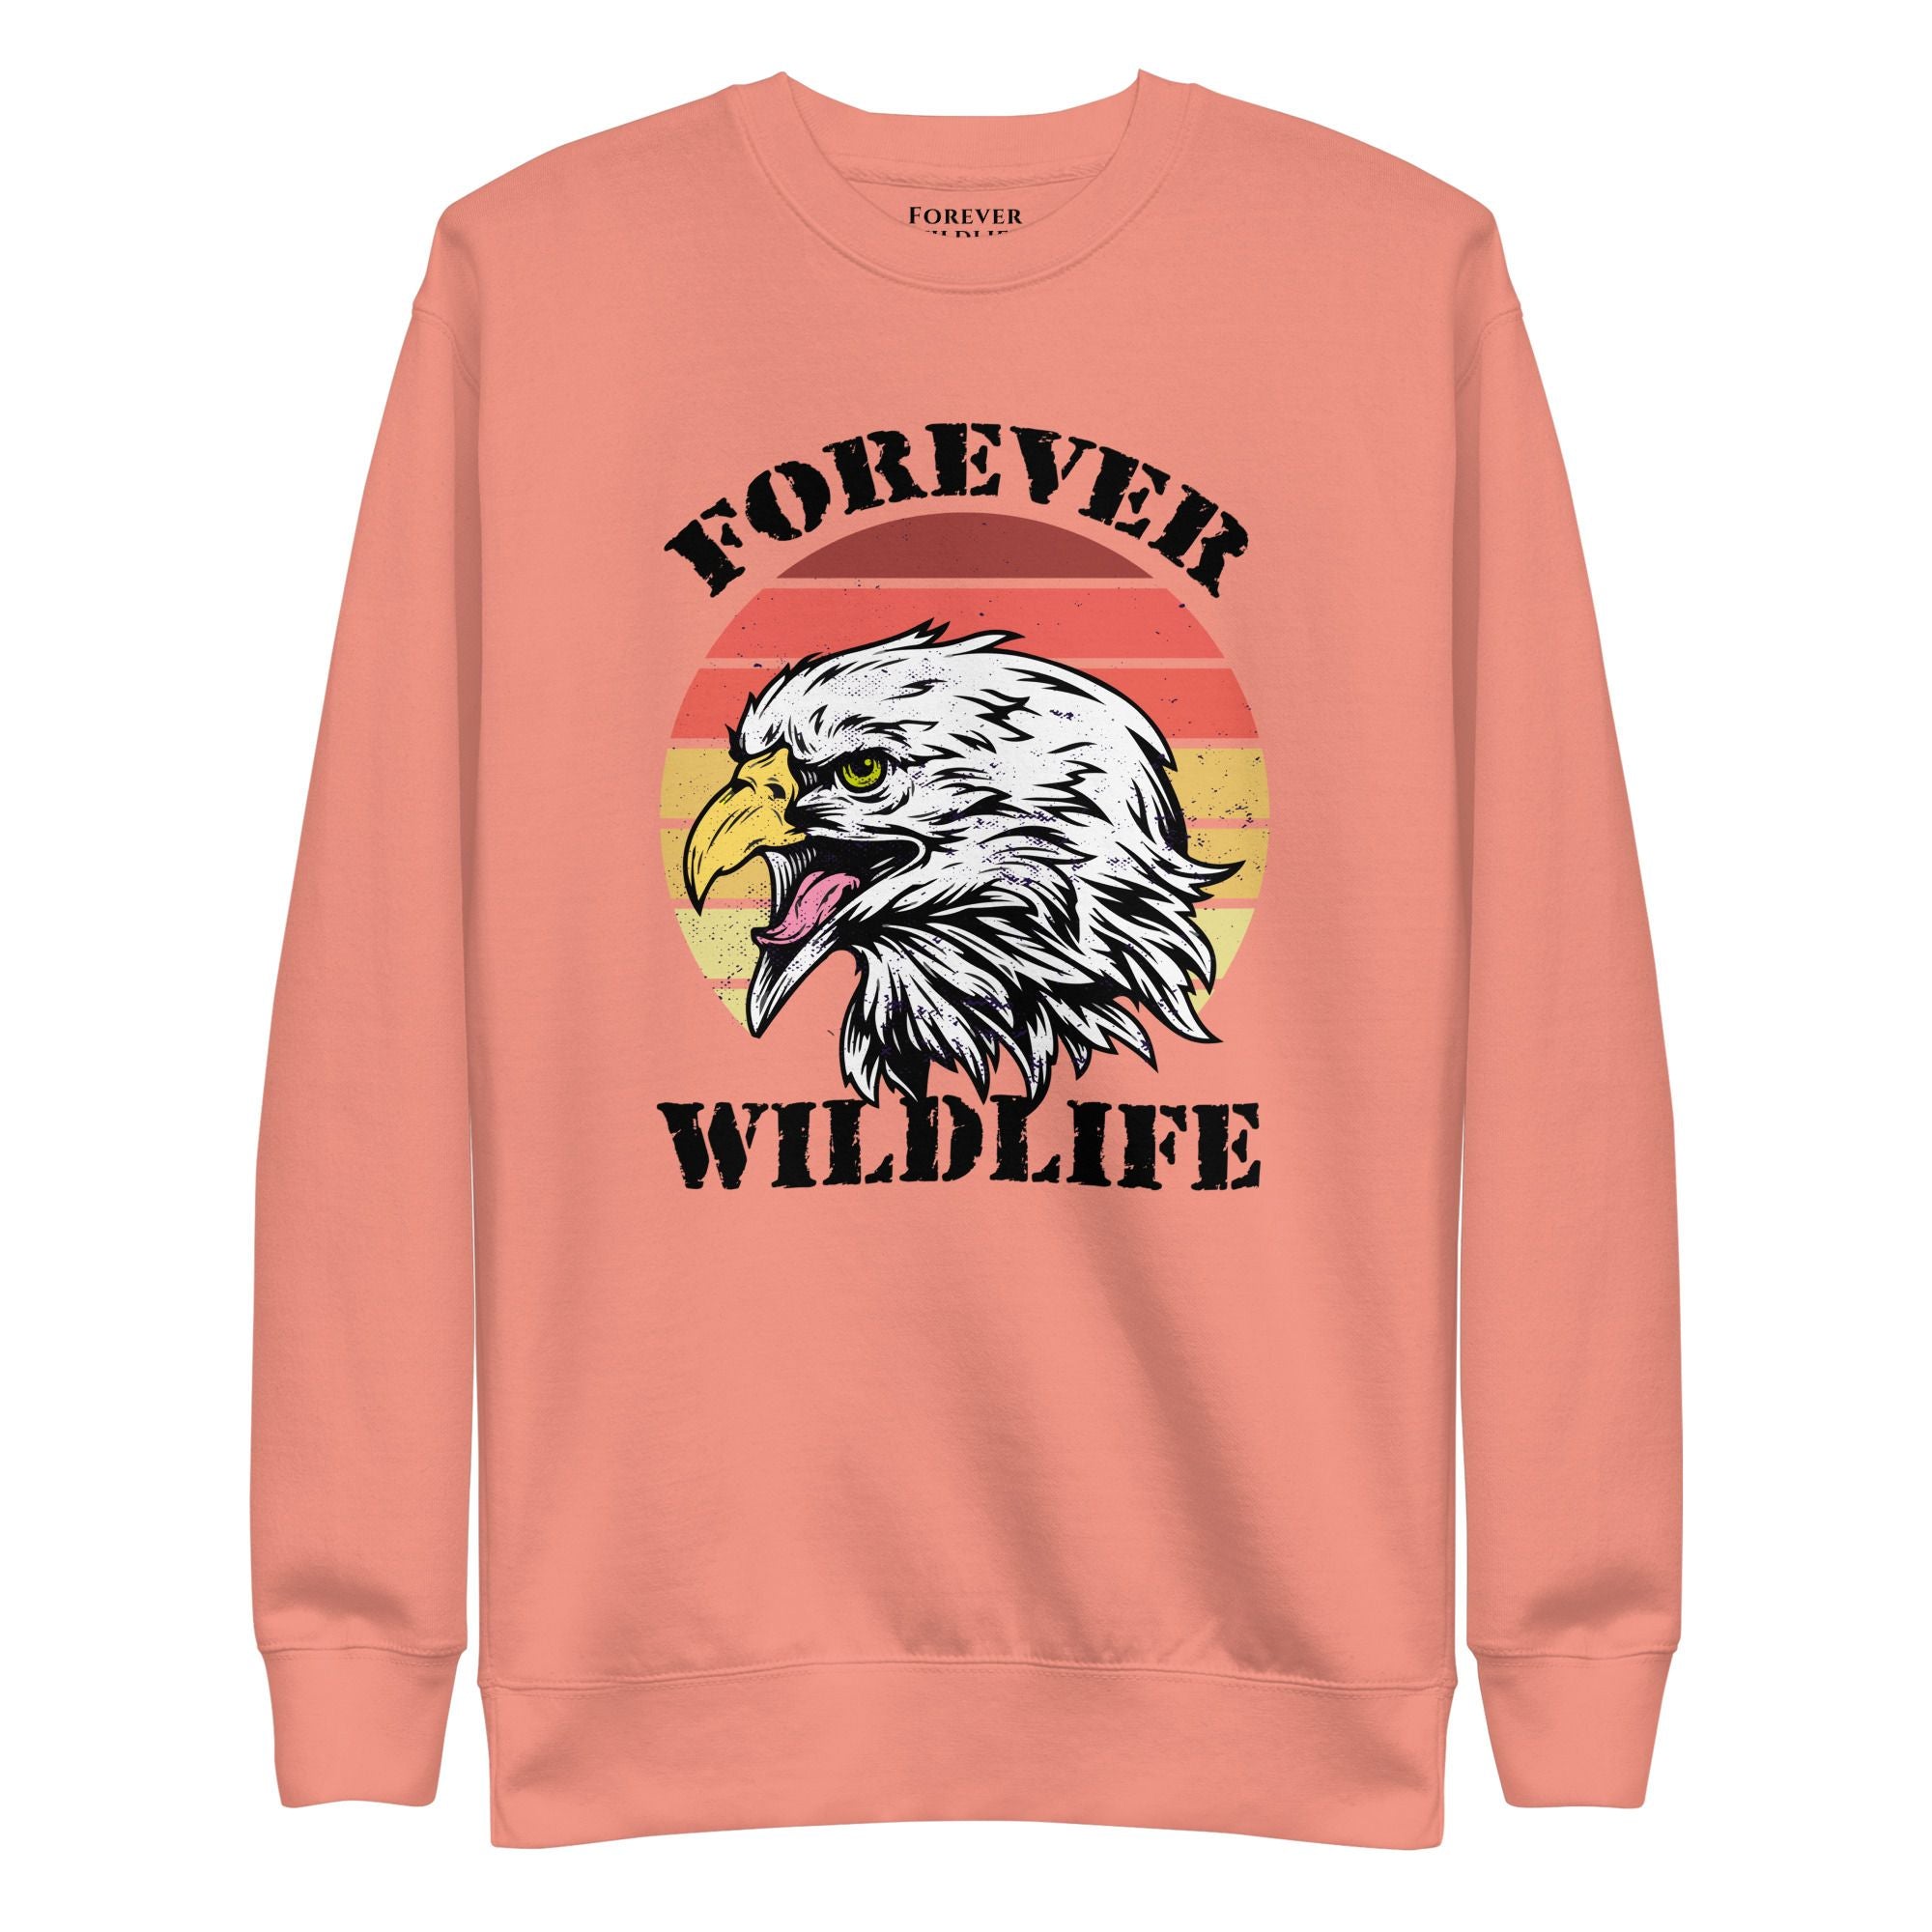 Eagle Sweatshirt in Rose-Premium Wildlife Animal Inspiration Sweatshirt Design, part of Wildlife Sweatshirts & Clothing from Forever Wildlife.